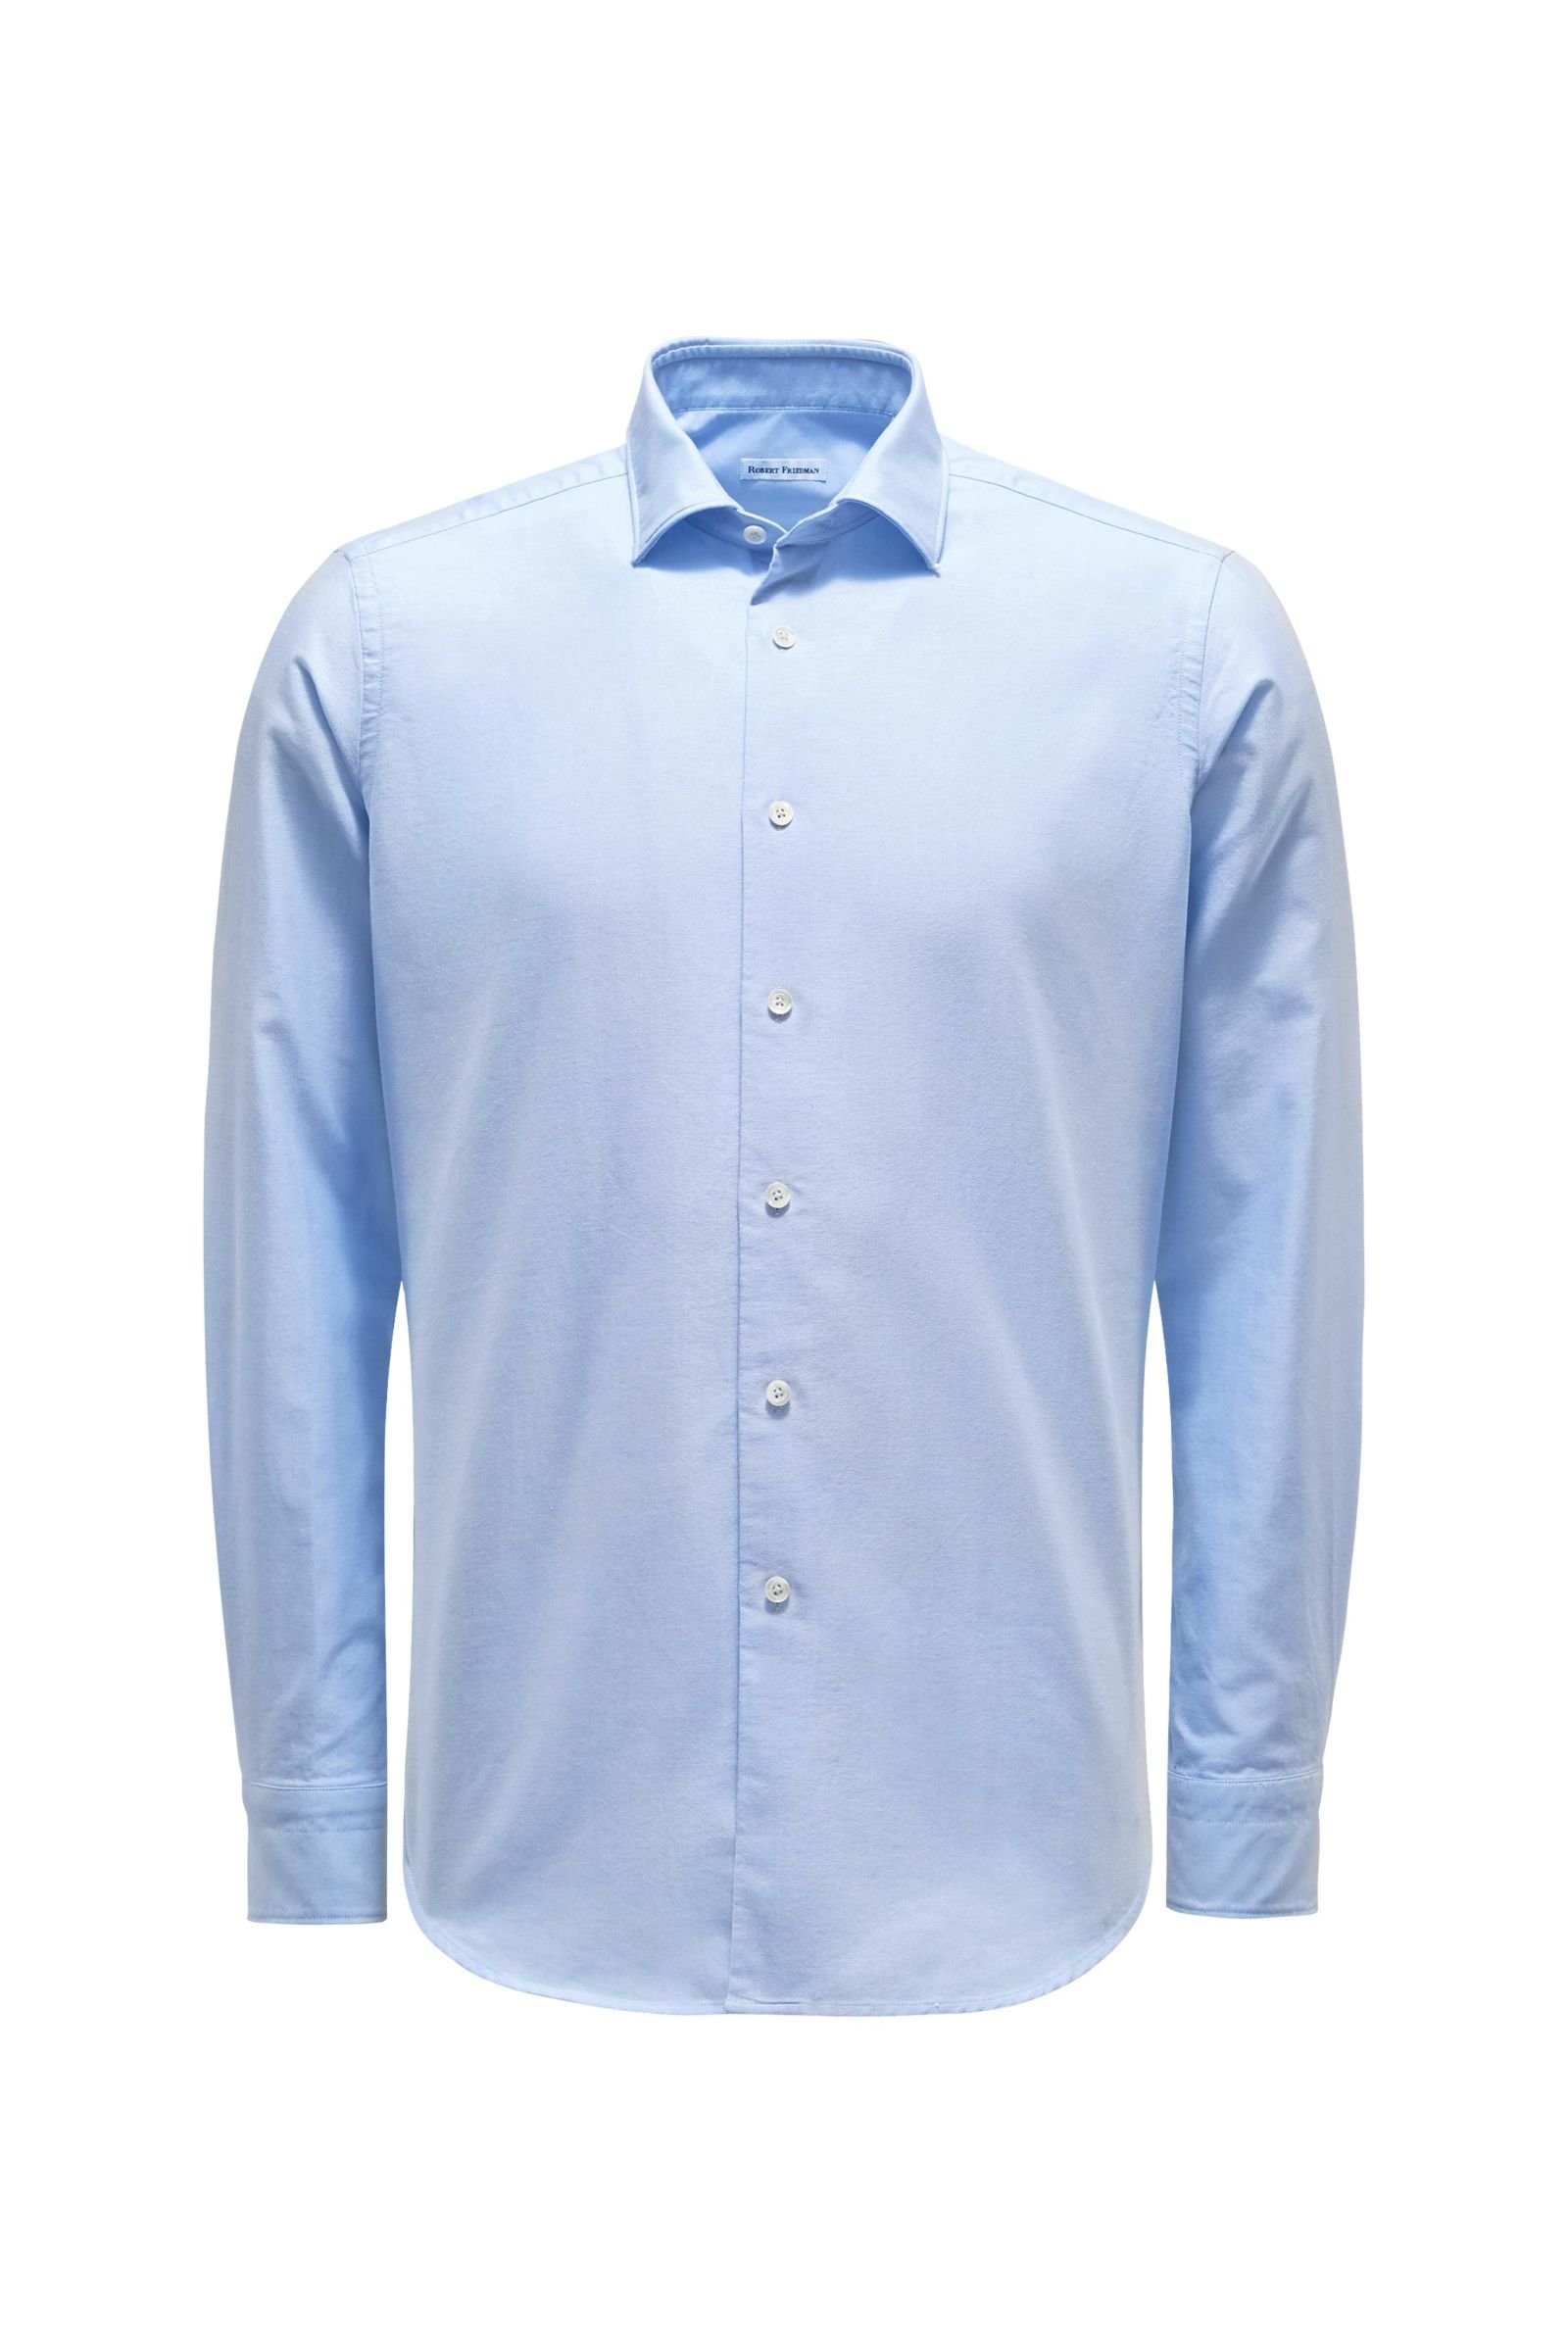 Oxford shirt 'Leo' slim collar light blue